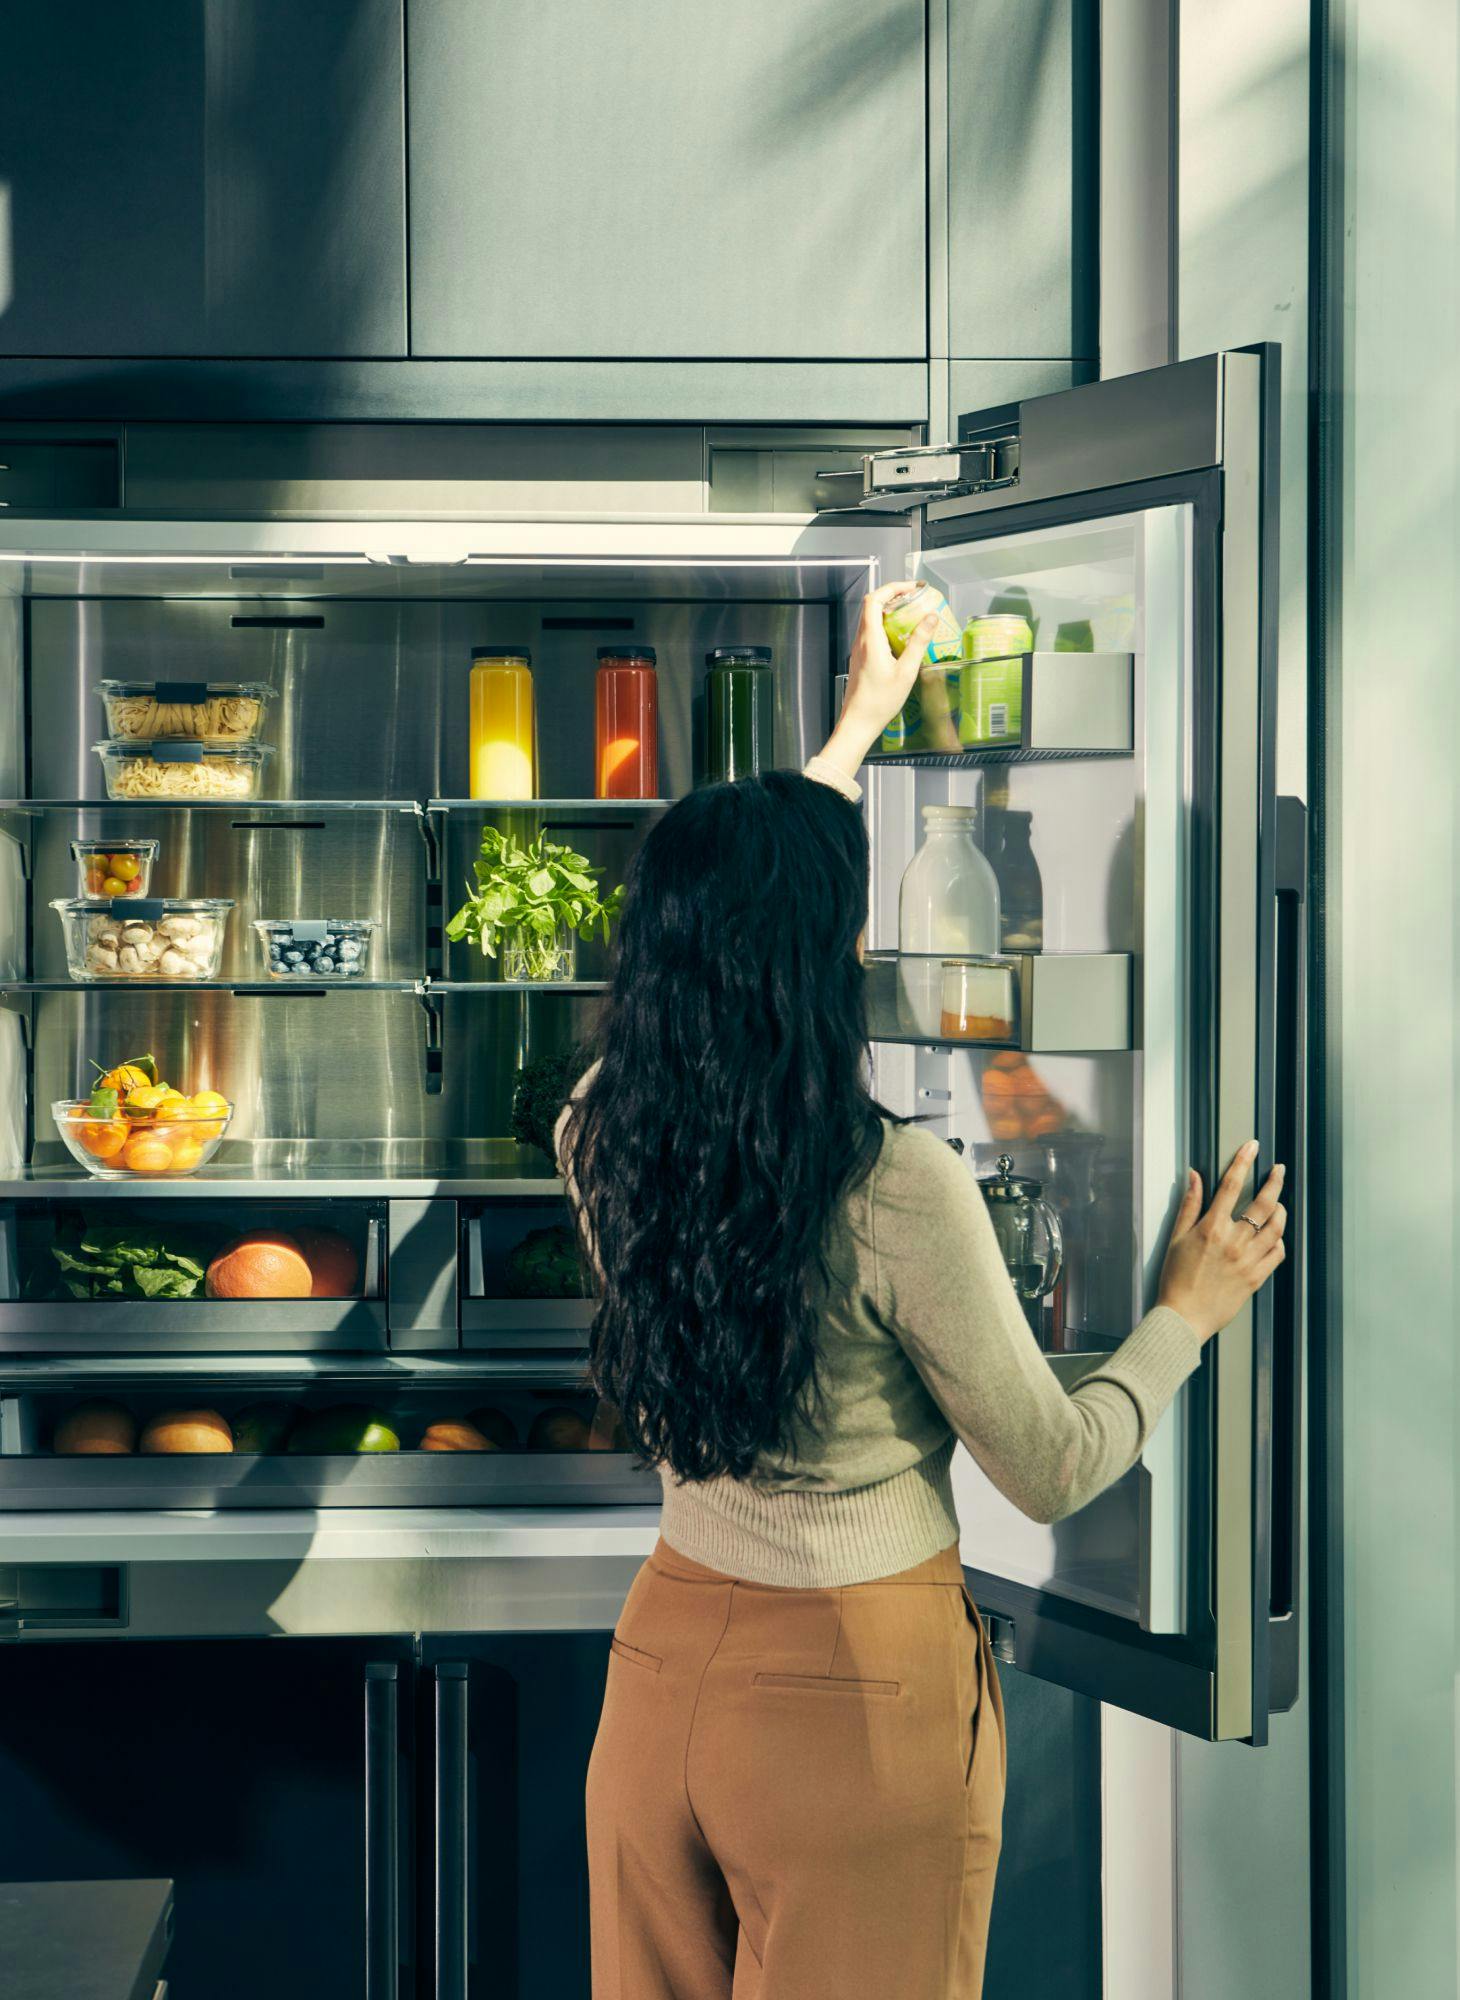 A woman grabbing beverage from an open refrigerator door